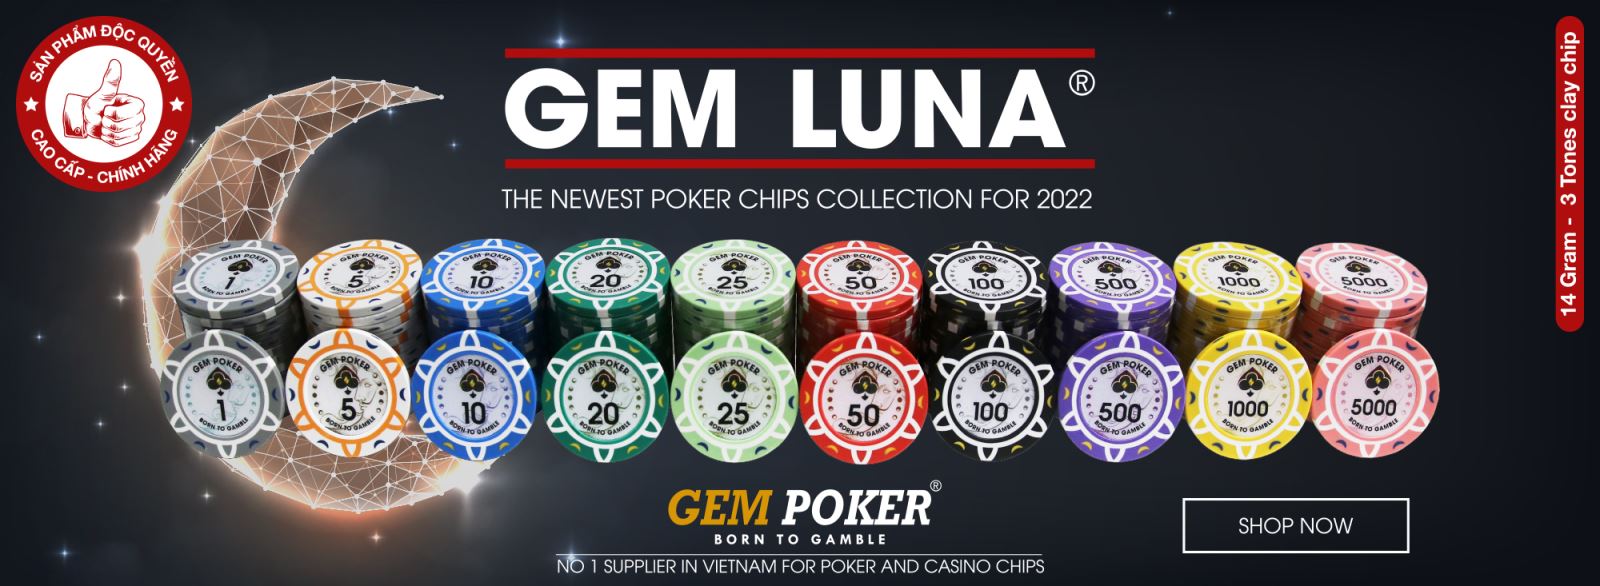 200 Chip Poker Clay GEM Luna 2022